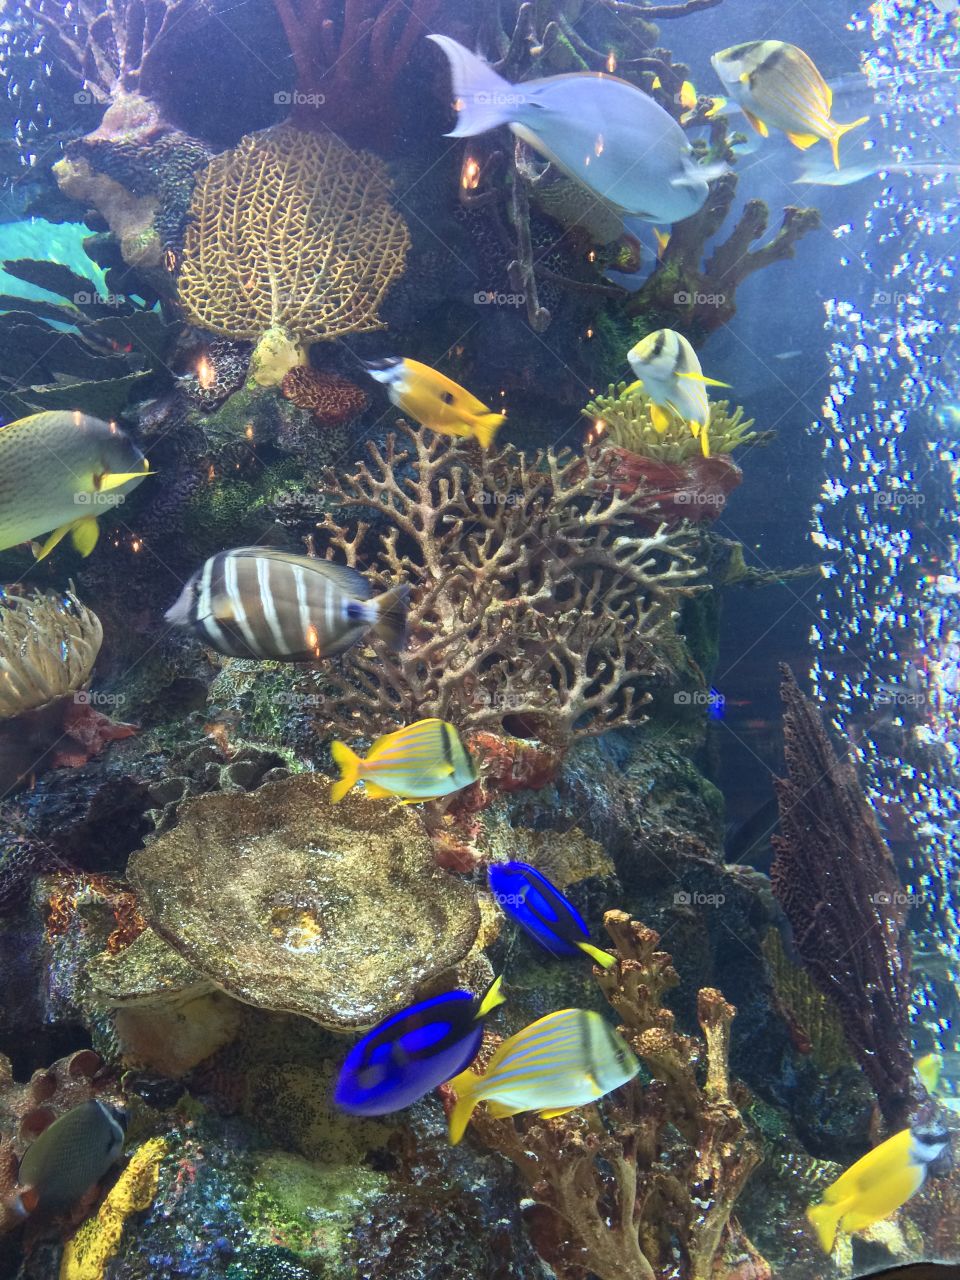 Rainforest Cafe fun . Gorgeous fish tank at Rainforest Cafe